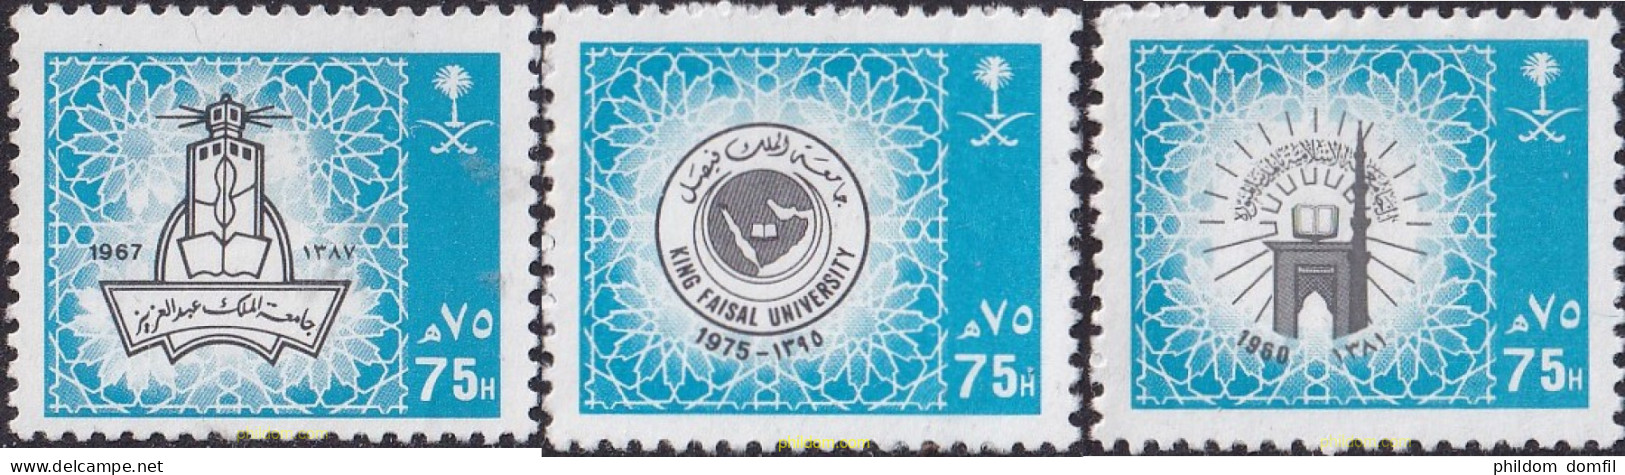 723754 MNH ARABIA SAUDITA 1992 ESCUDOS DE UNIVERSIDADES SAUDIES - Arabie Saoudite